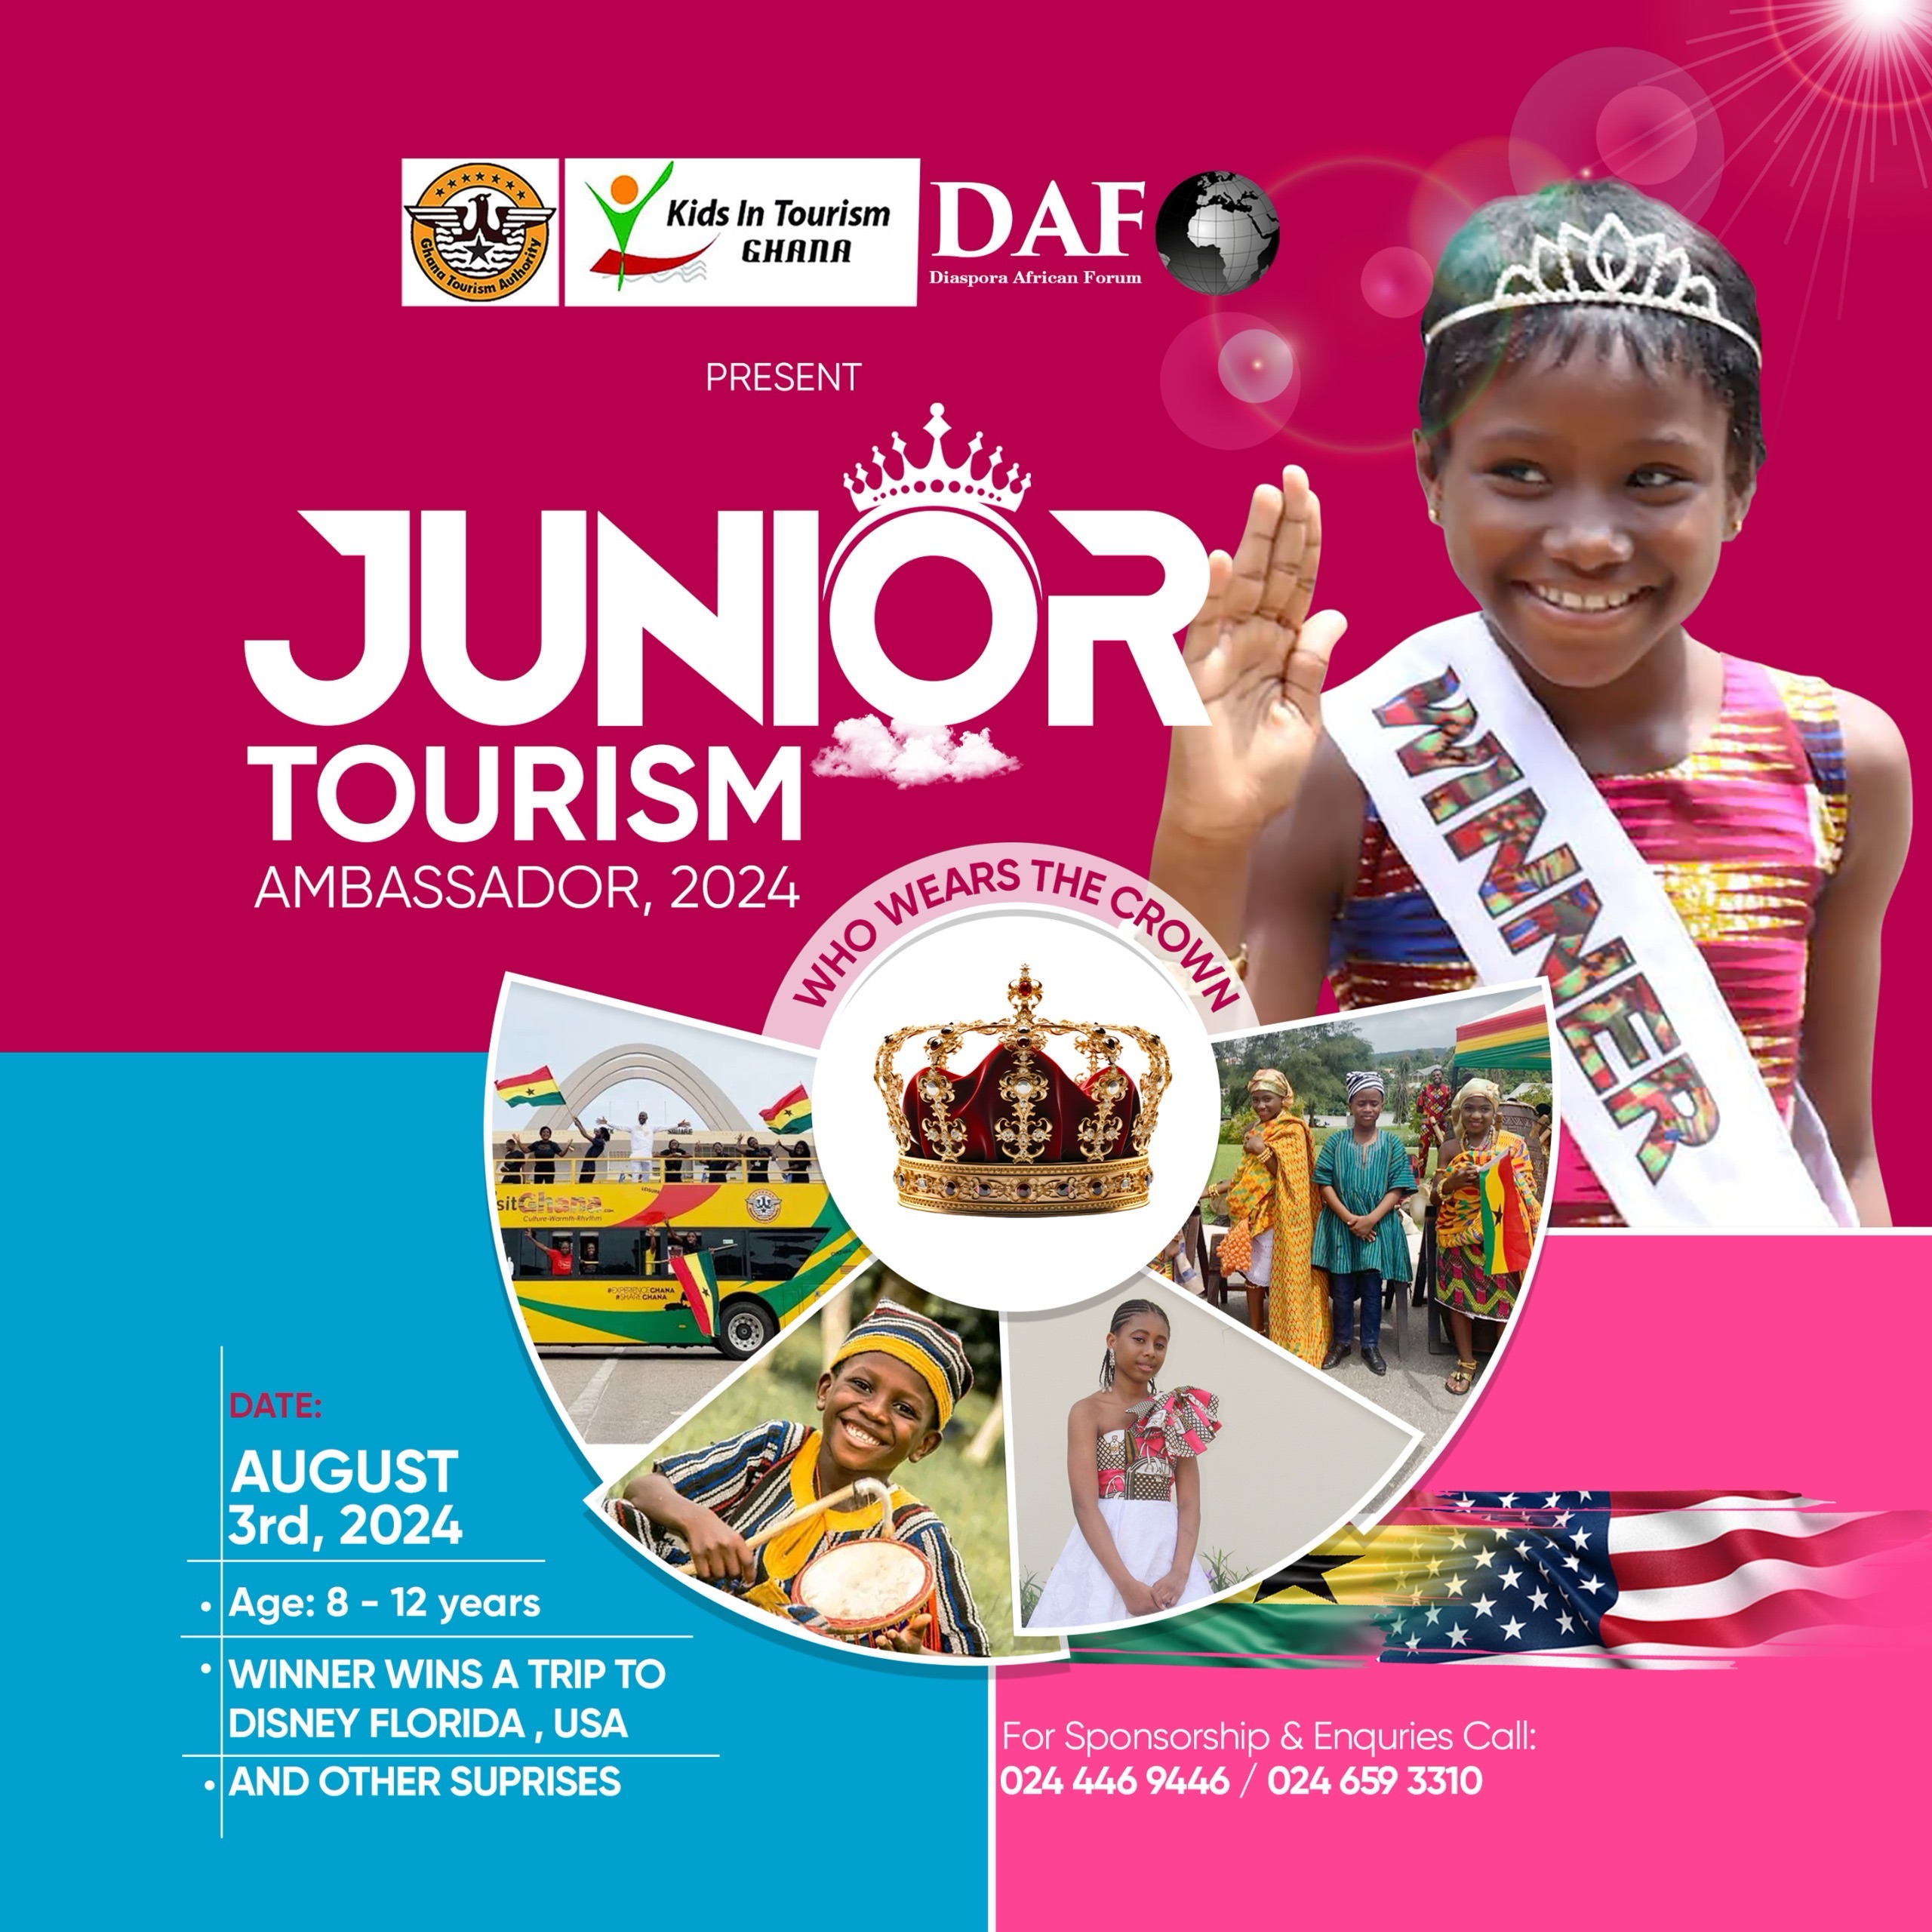 Kids in Tourism Ghana and DAF Open Nominations for Junior Tourism Ambassador 2024